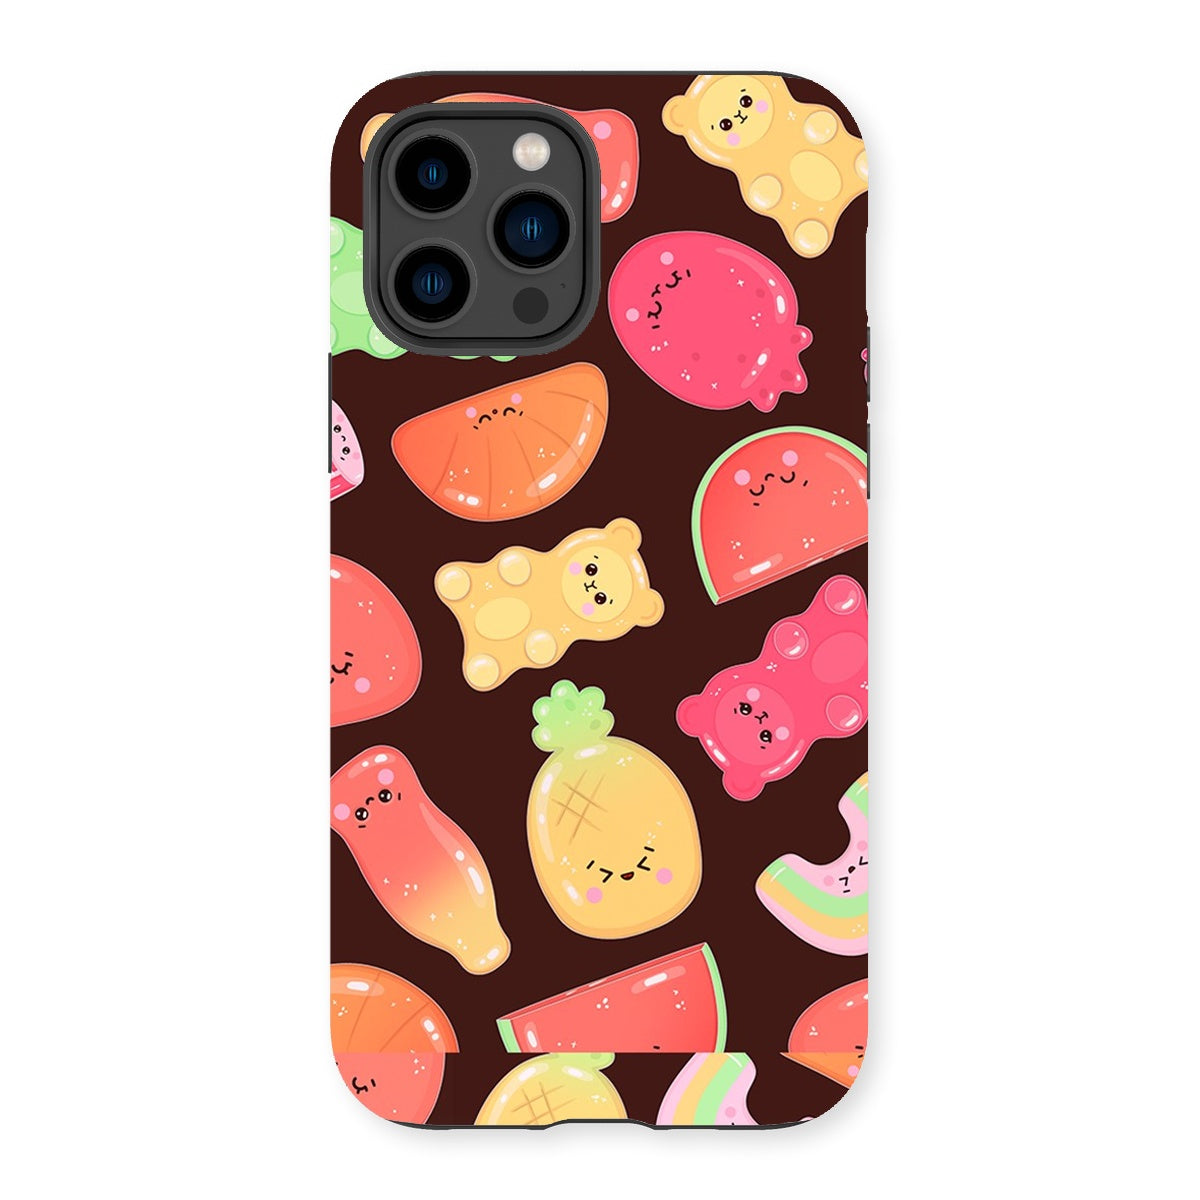 Gummy Candy Iphone Tough Phone Case